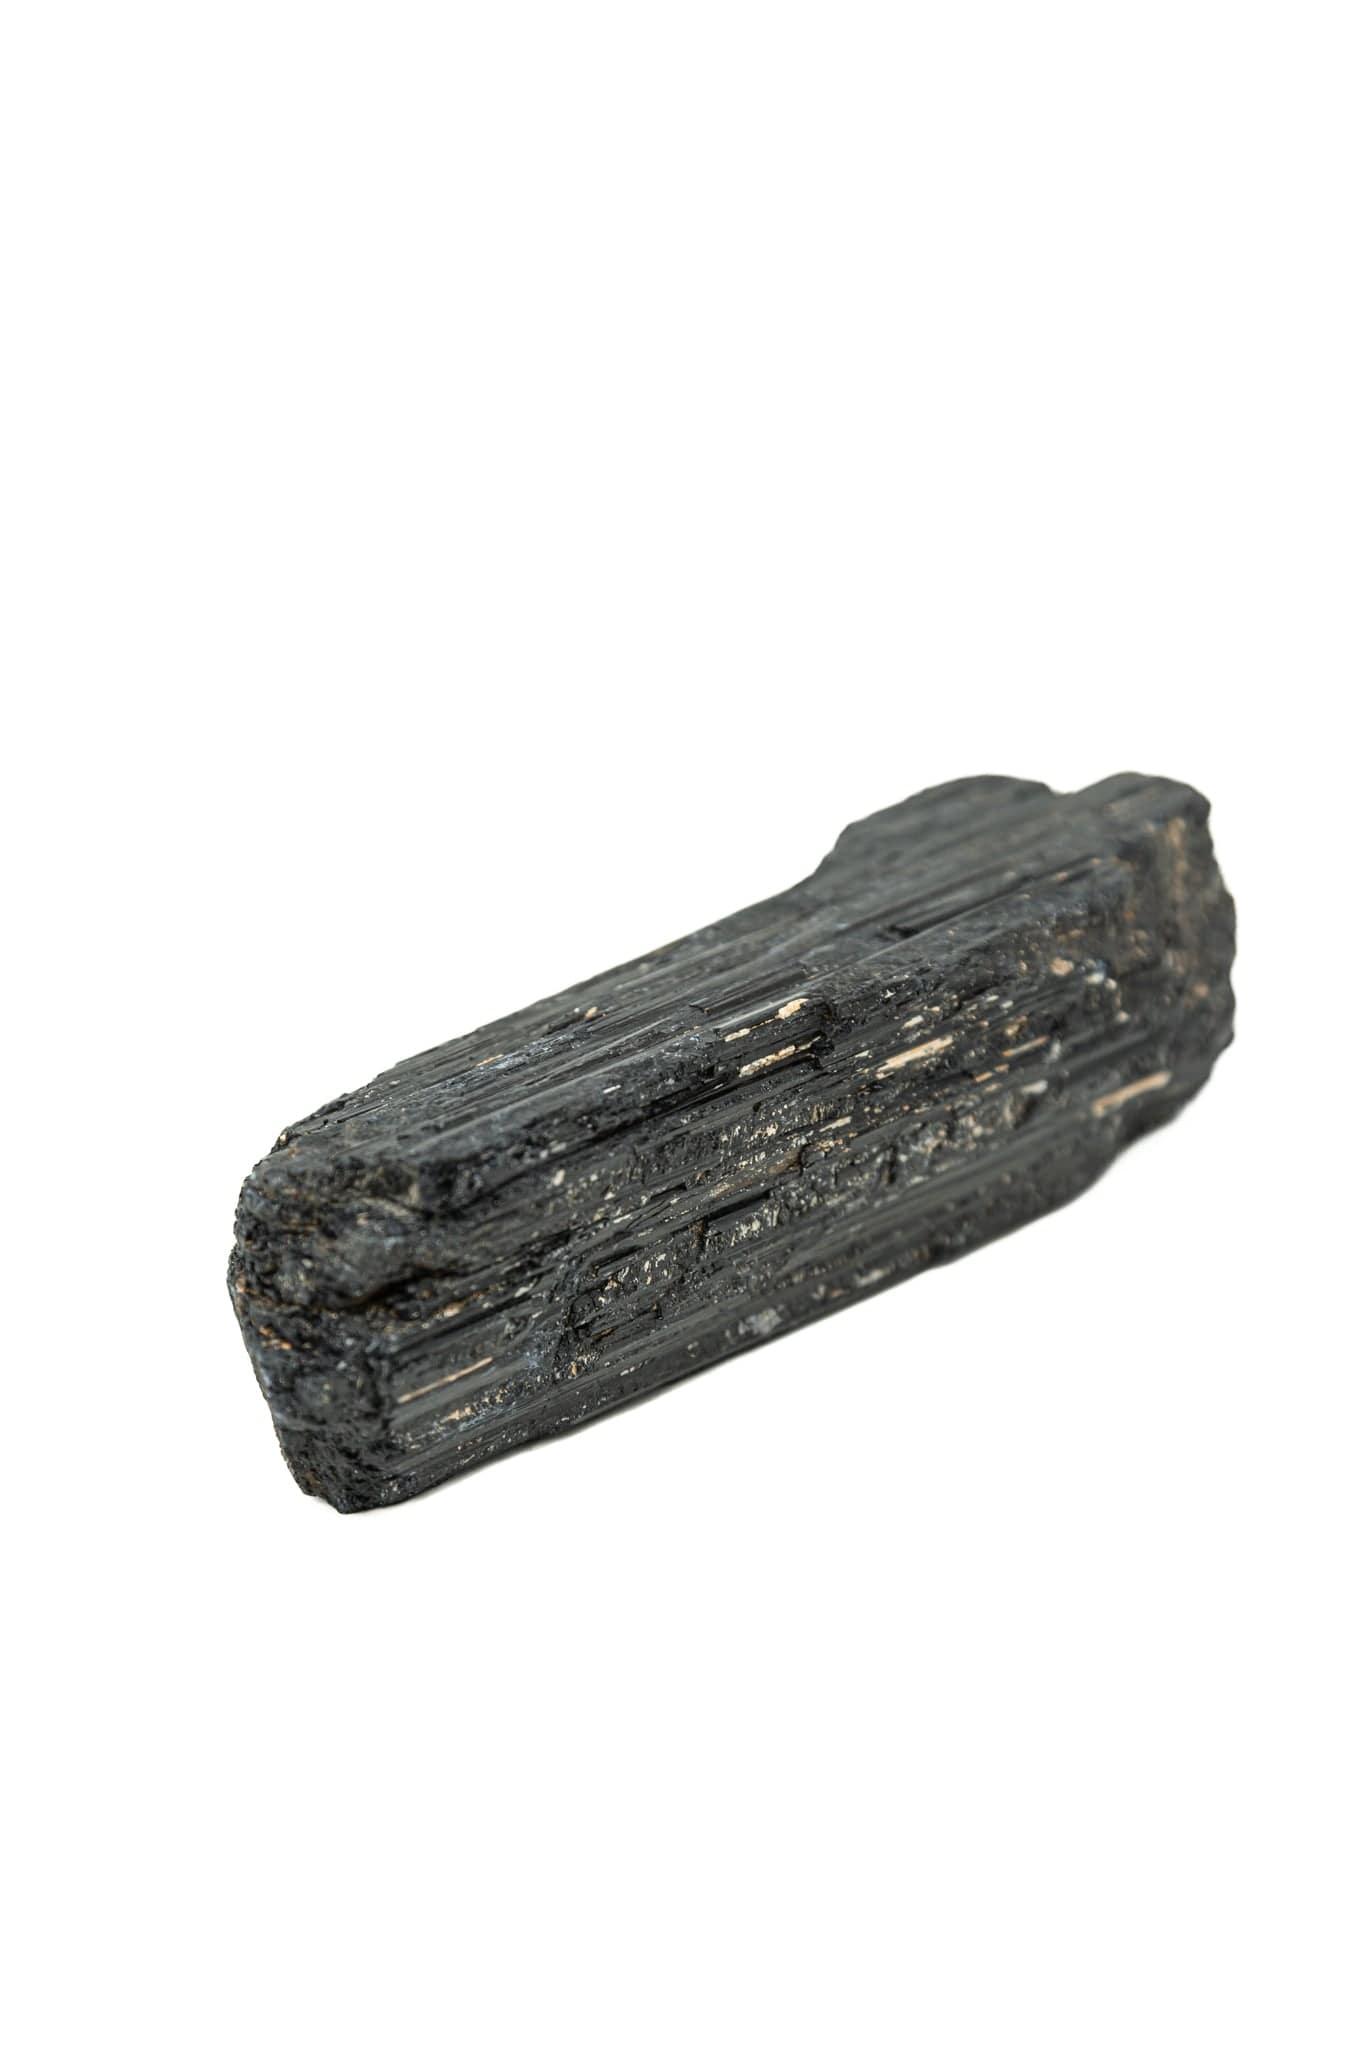 Black Tourmaline Logs Black Tourmaline